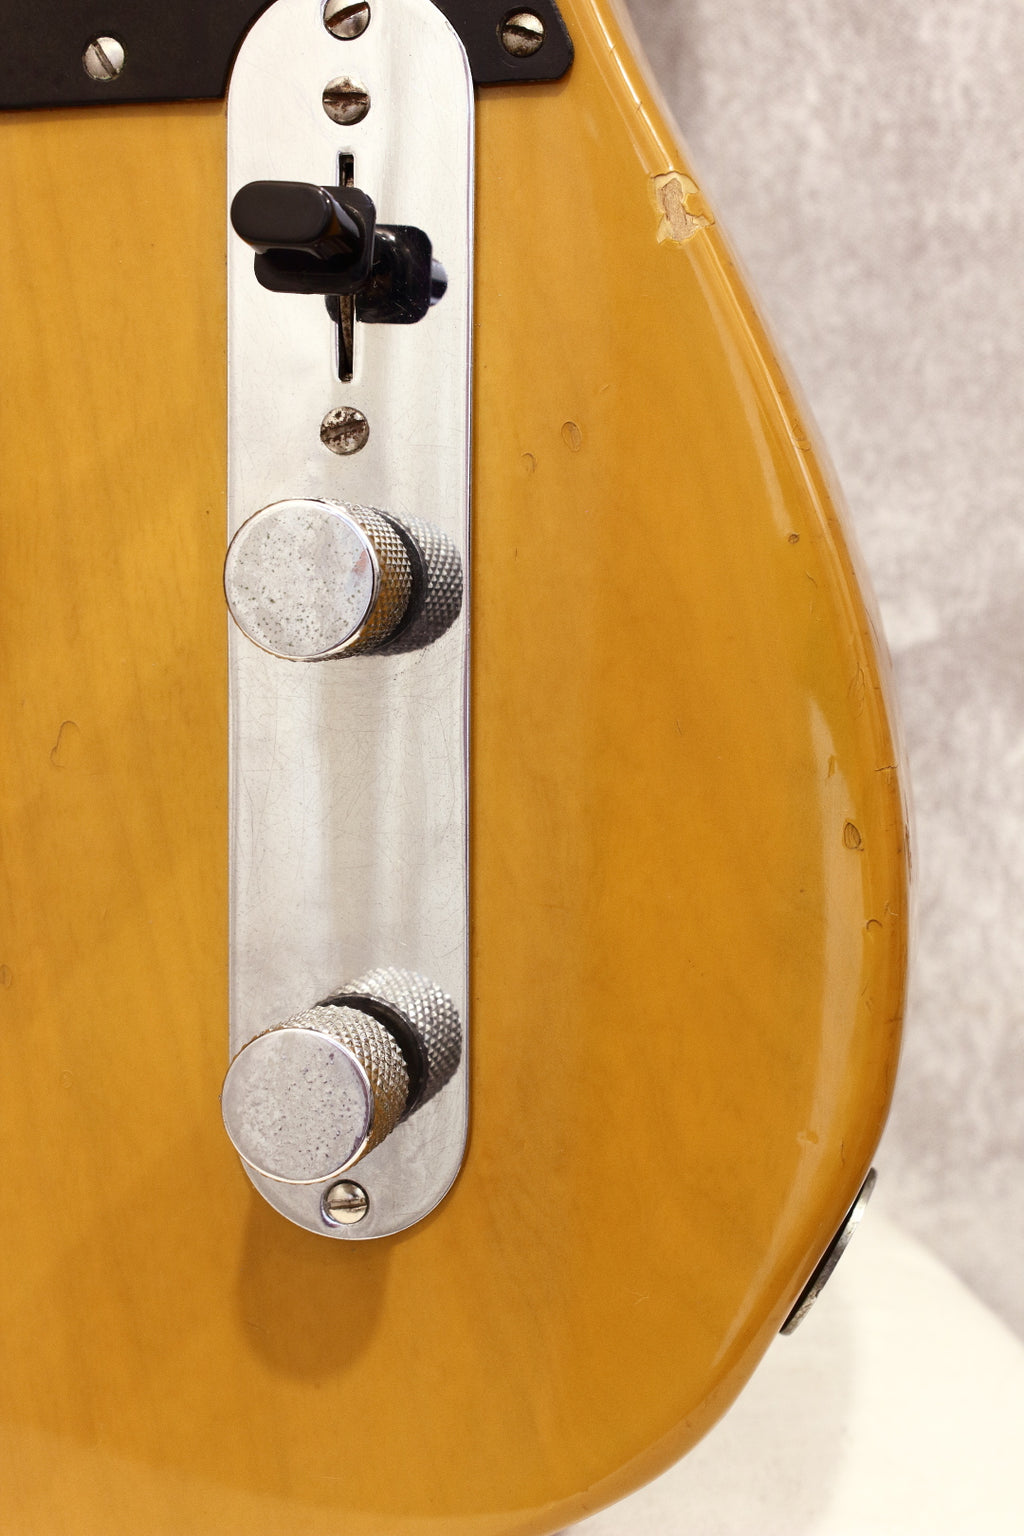 Fender Japan '52 Telecaster TL52-70 Butterscotch Blonde 1985